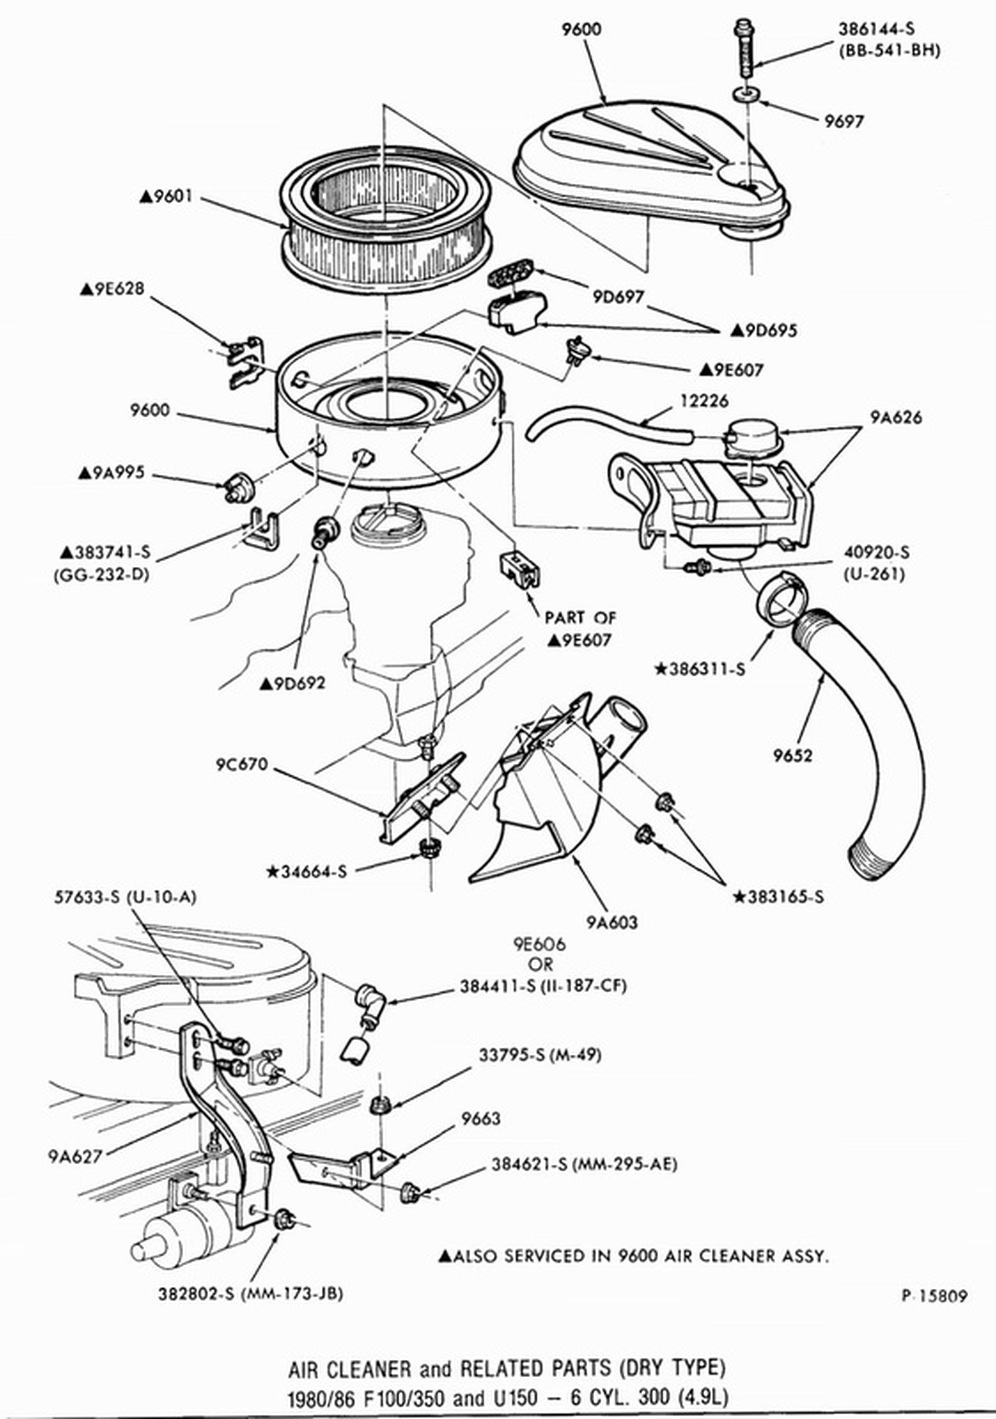 [DIAGRAM] 1979 Ford F100 460 Engine Diagram FULL Version